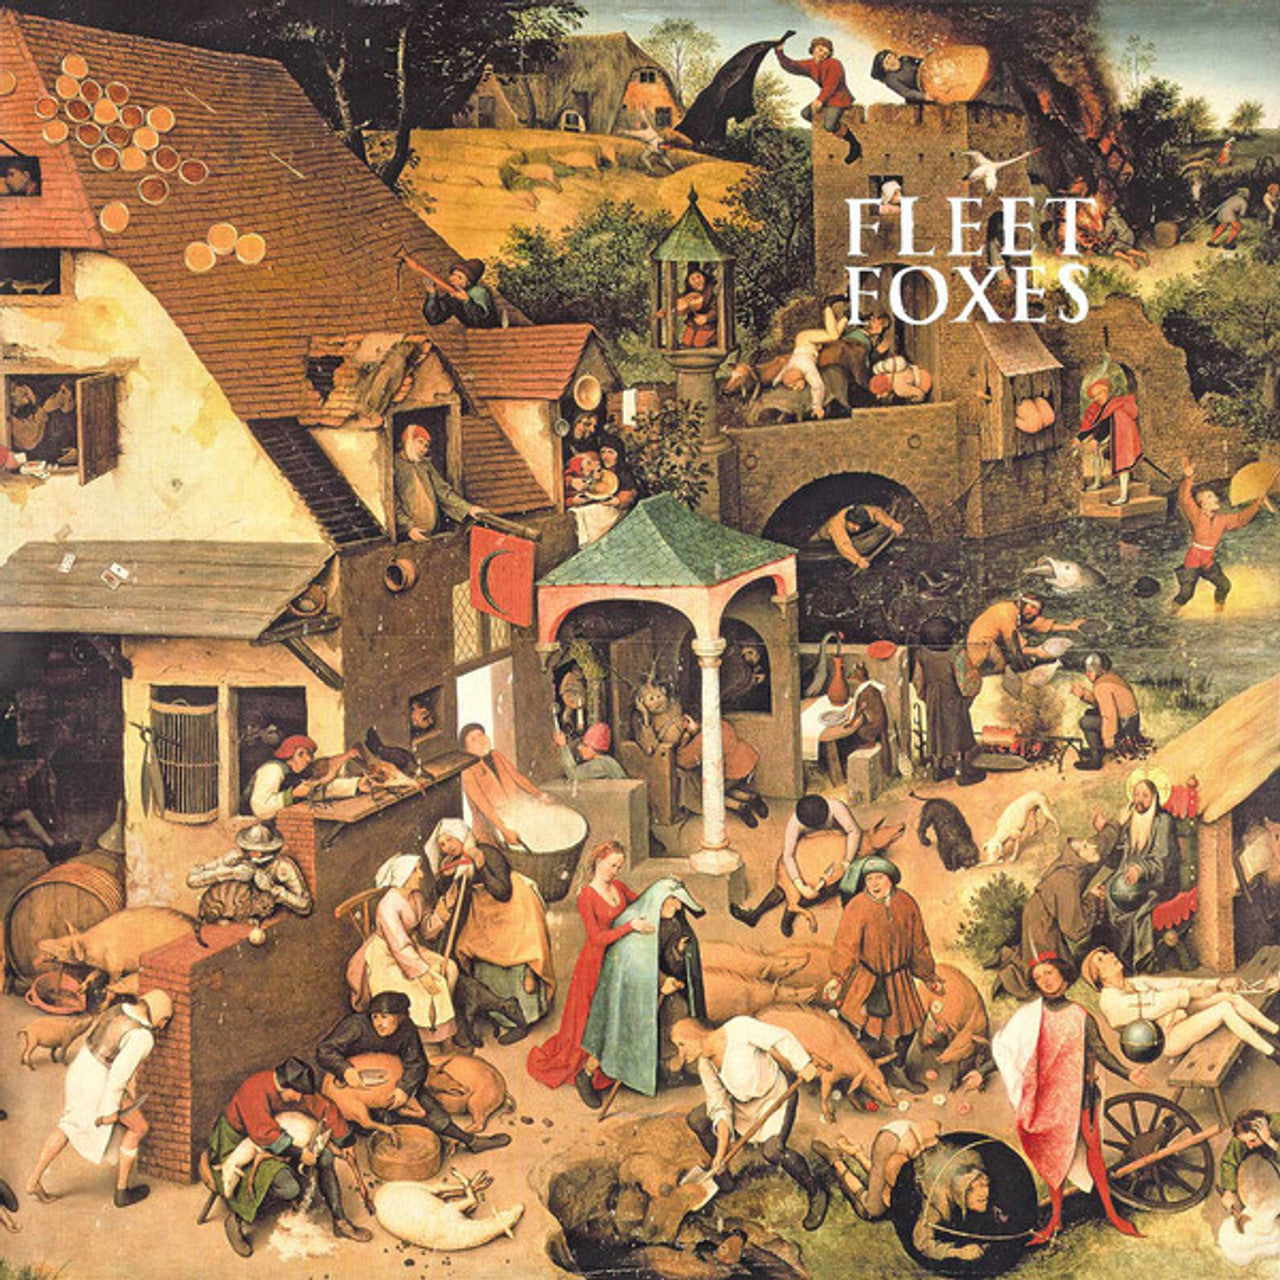 Fleet Foxes - Fleet Foxes (includes Sun Giant EP)